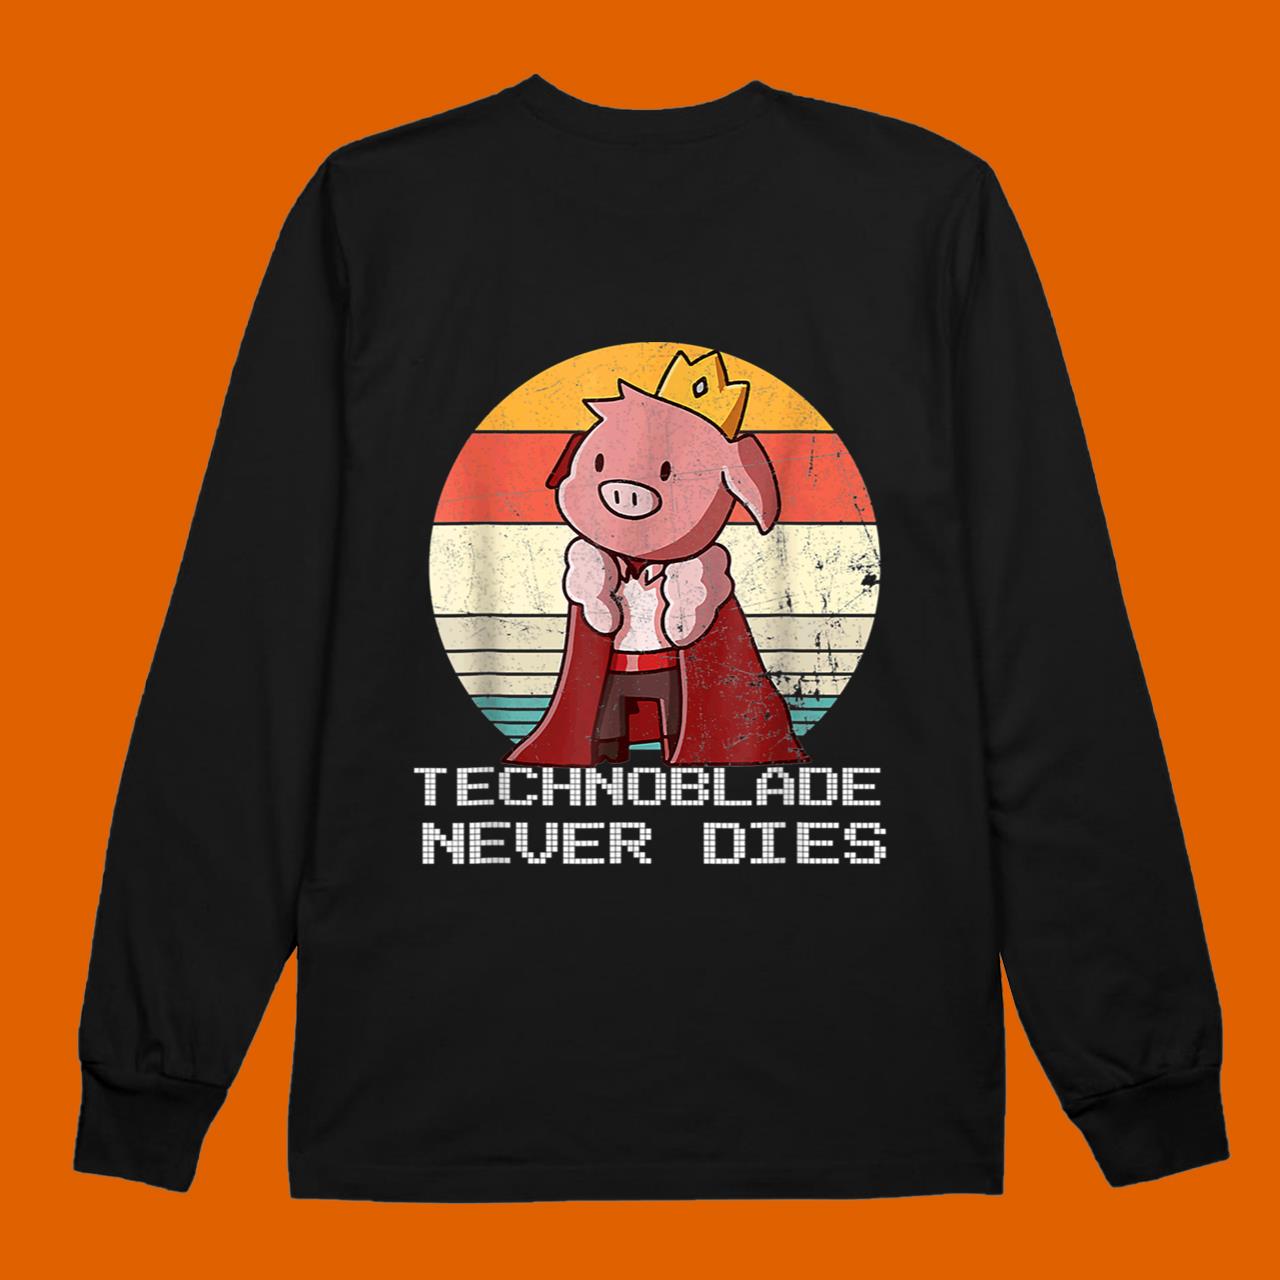 Retro Style Technoblade Merch Cosplay Classic T-Shirt